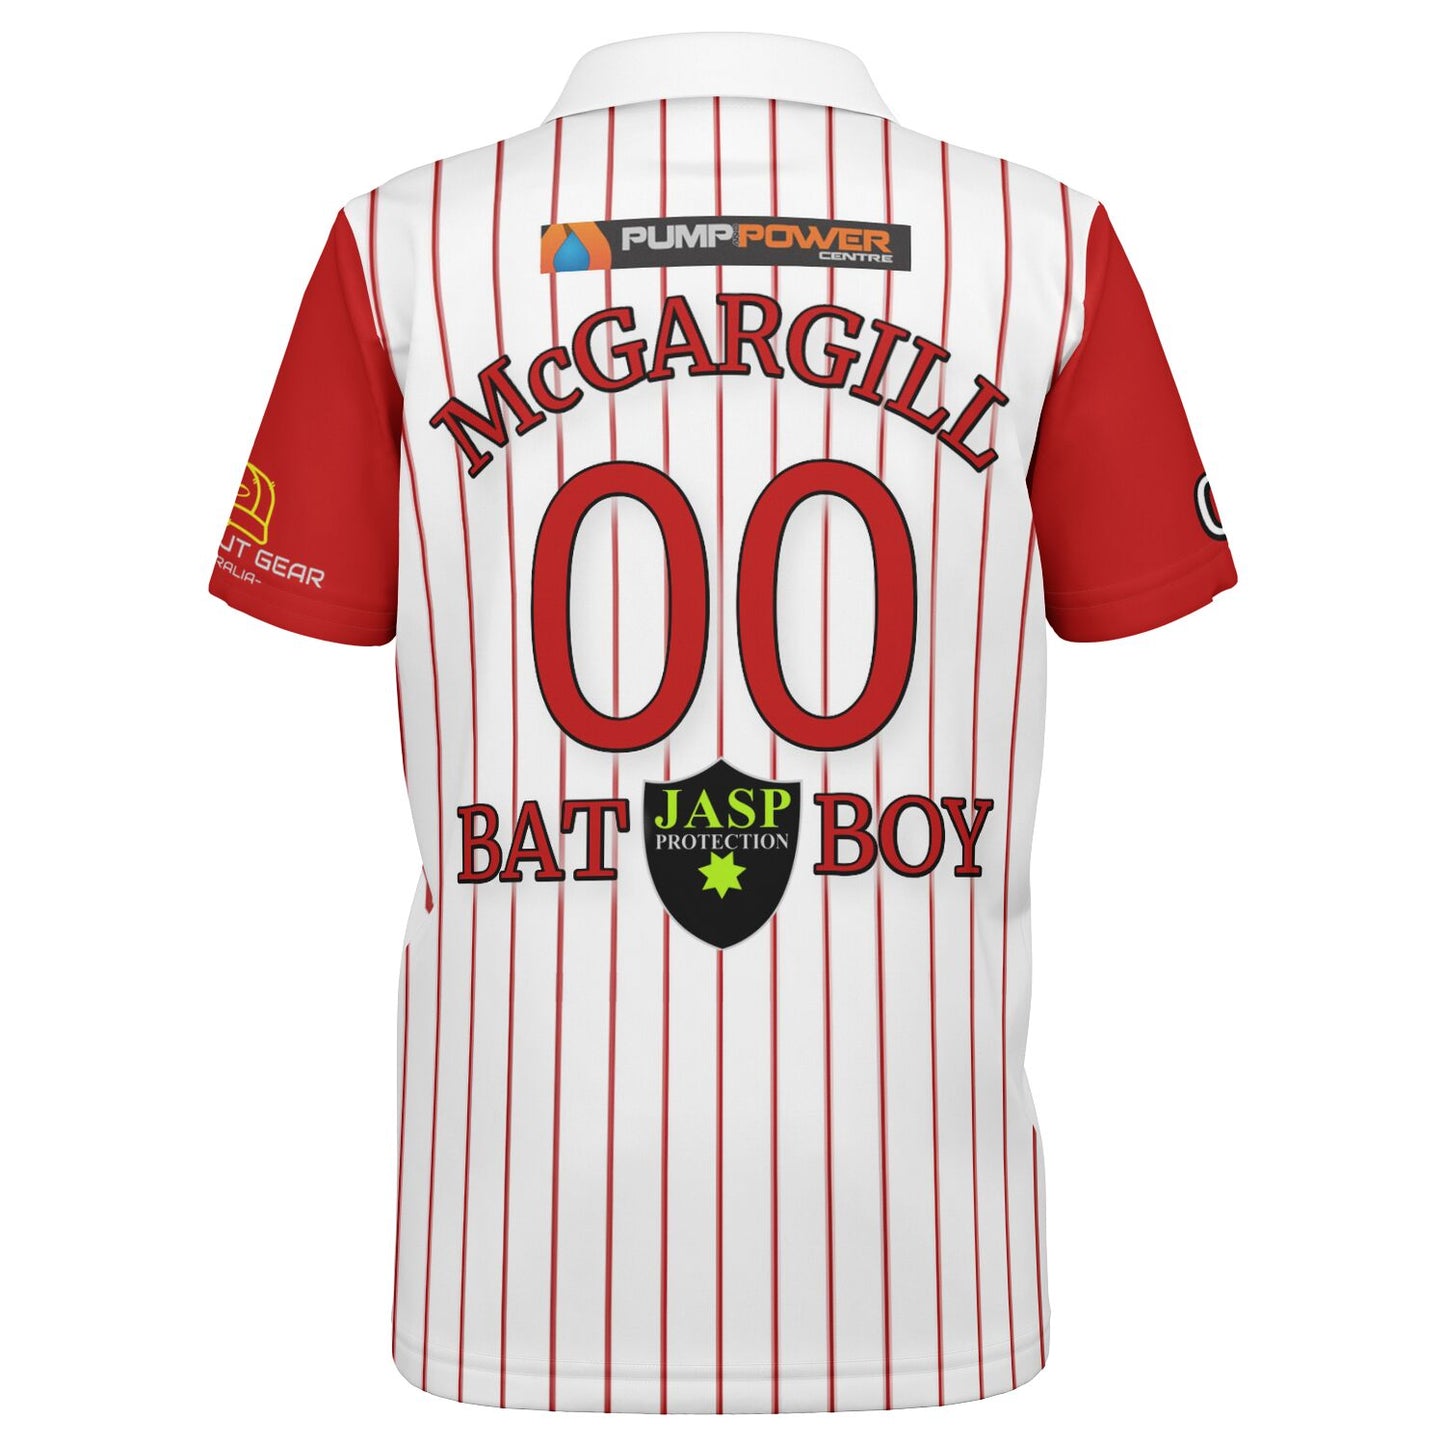 Logan McGargill #00 Demons Youth Polo Jersey XS-6/8 to XL-18/20